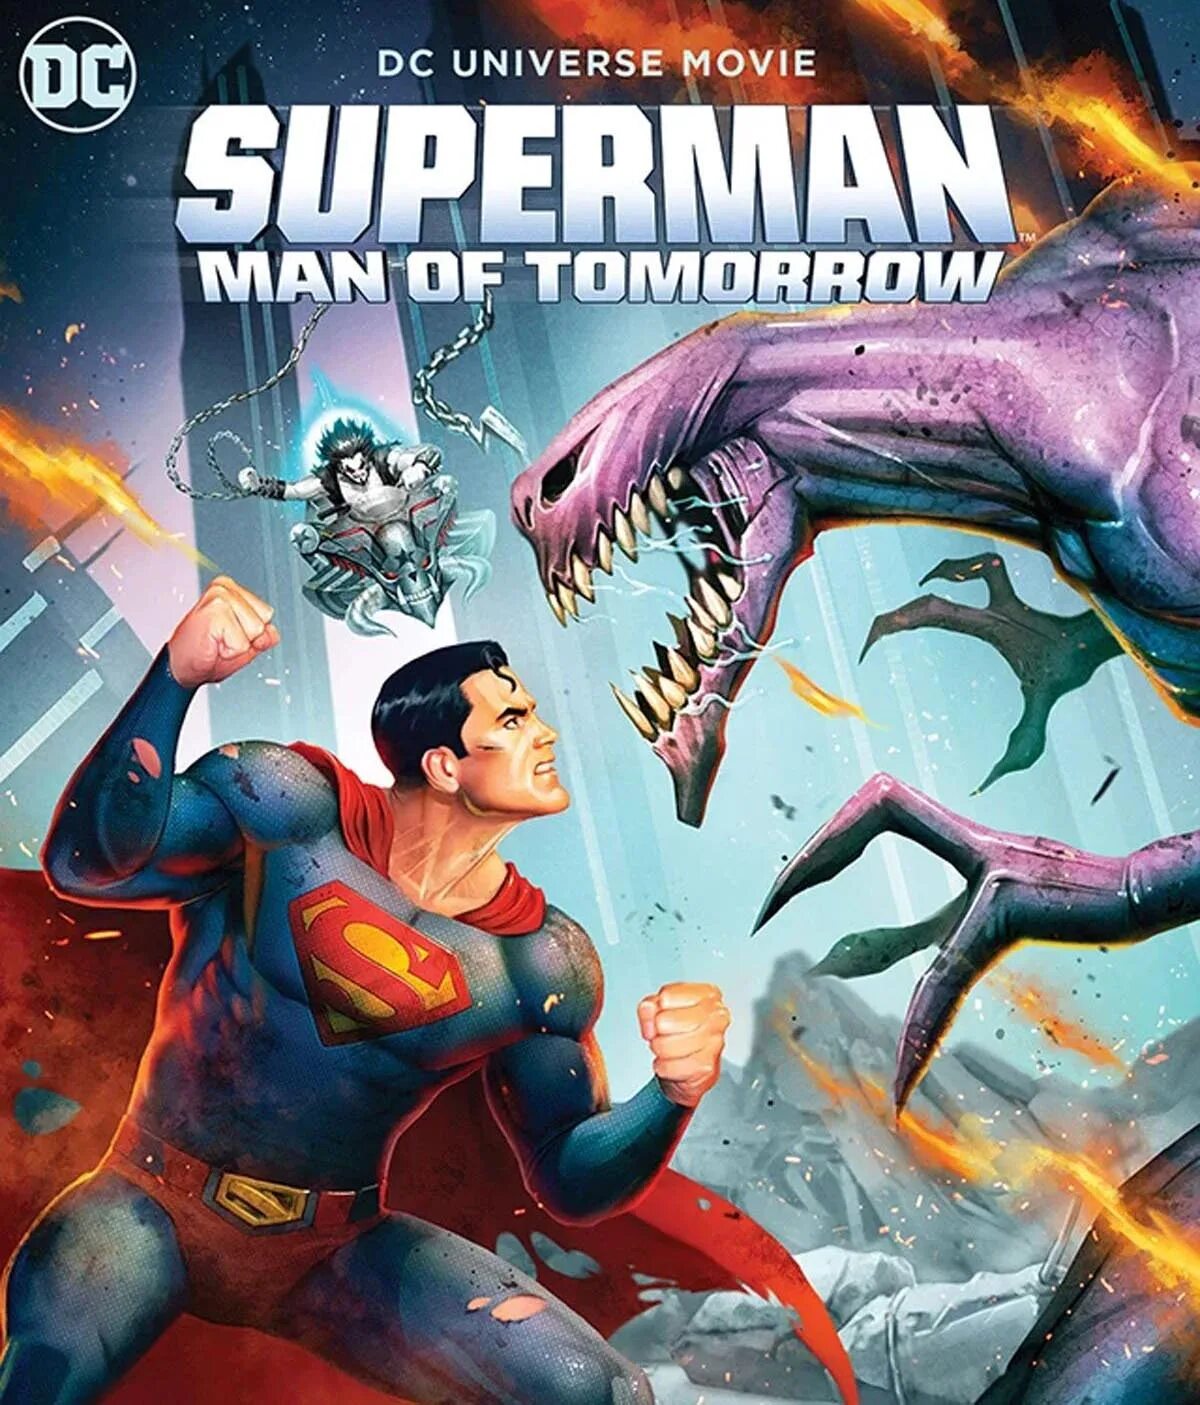 Супермен завтрашнего дня. Супермен человек завтрашнего дня. Имя монстра из мультфильма человек завтрашнего дня.